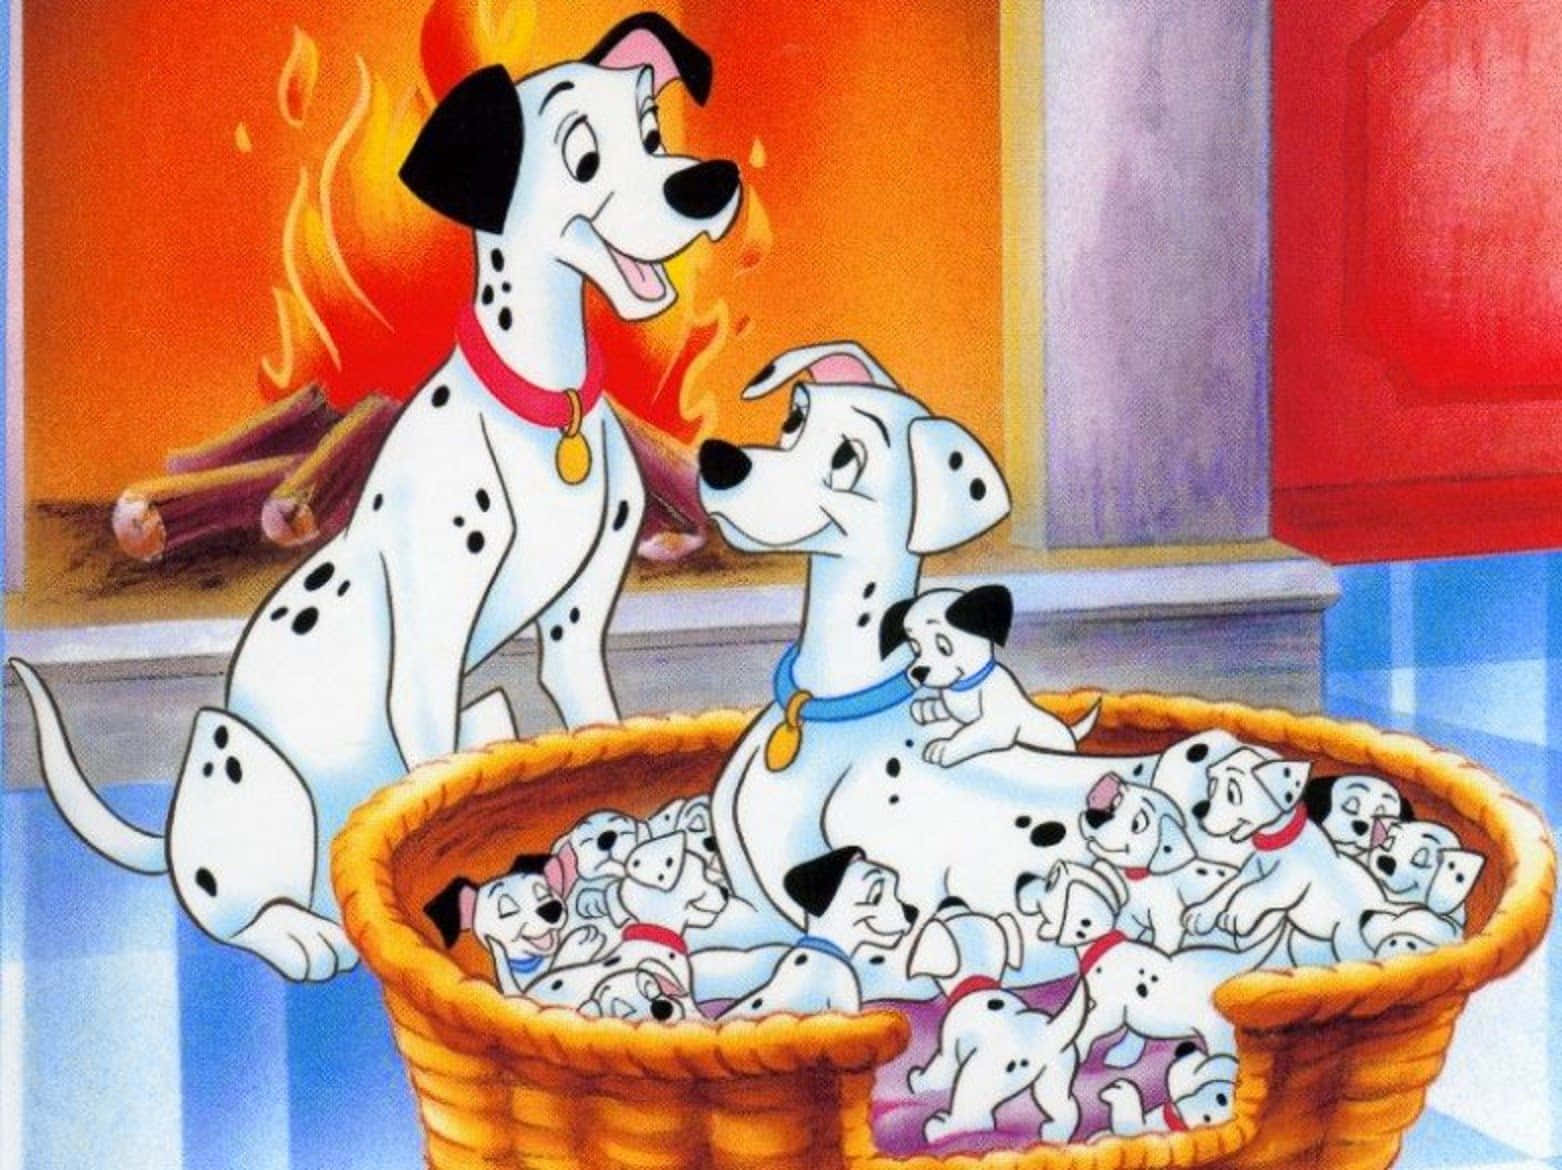 A classic Disney favourite, 101 Dalmatians